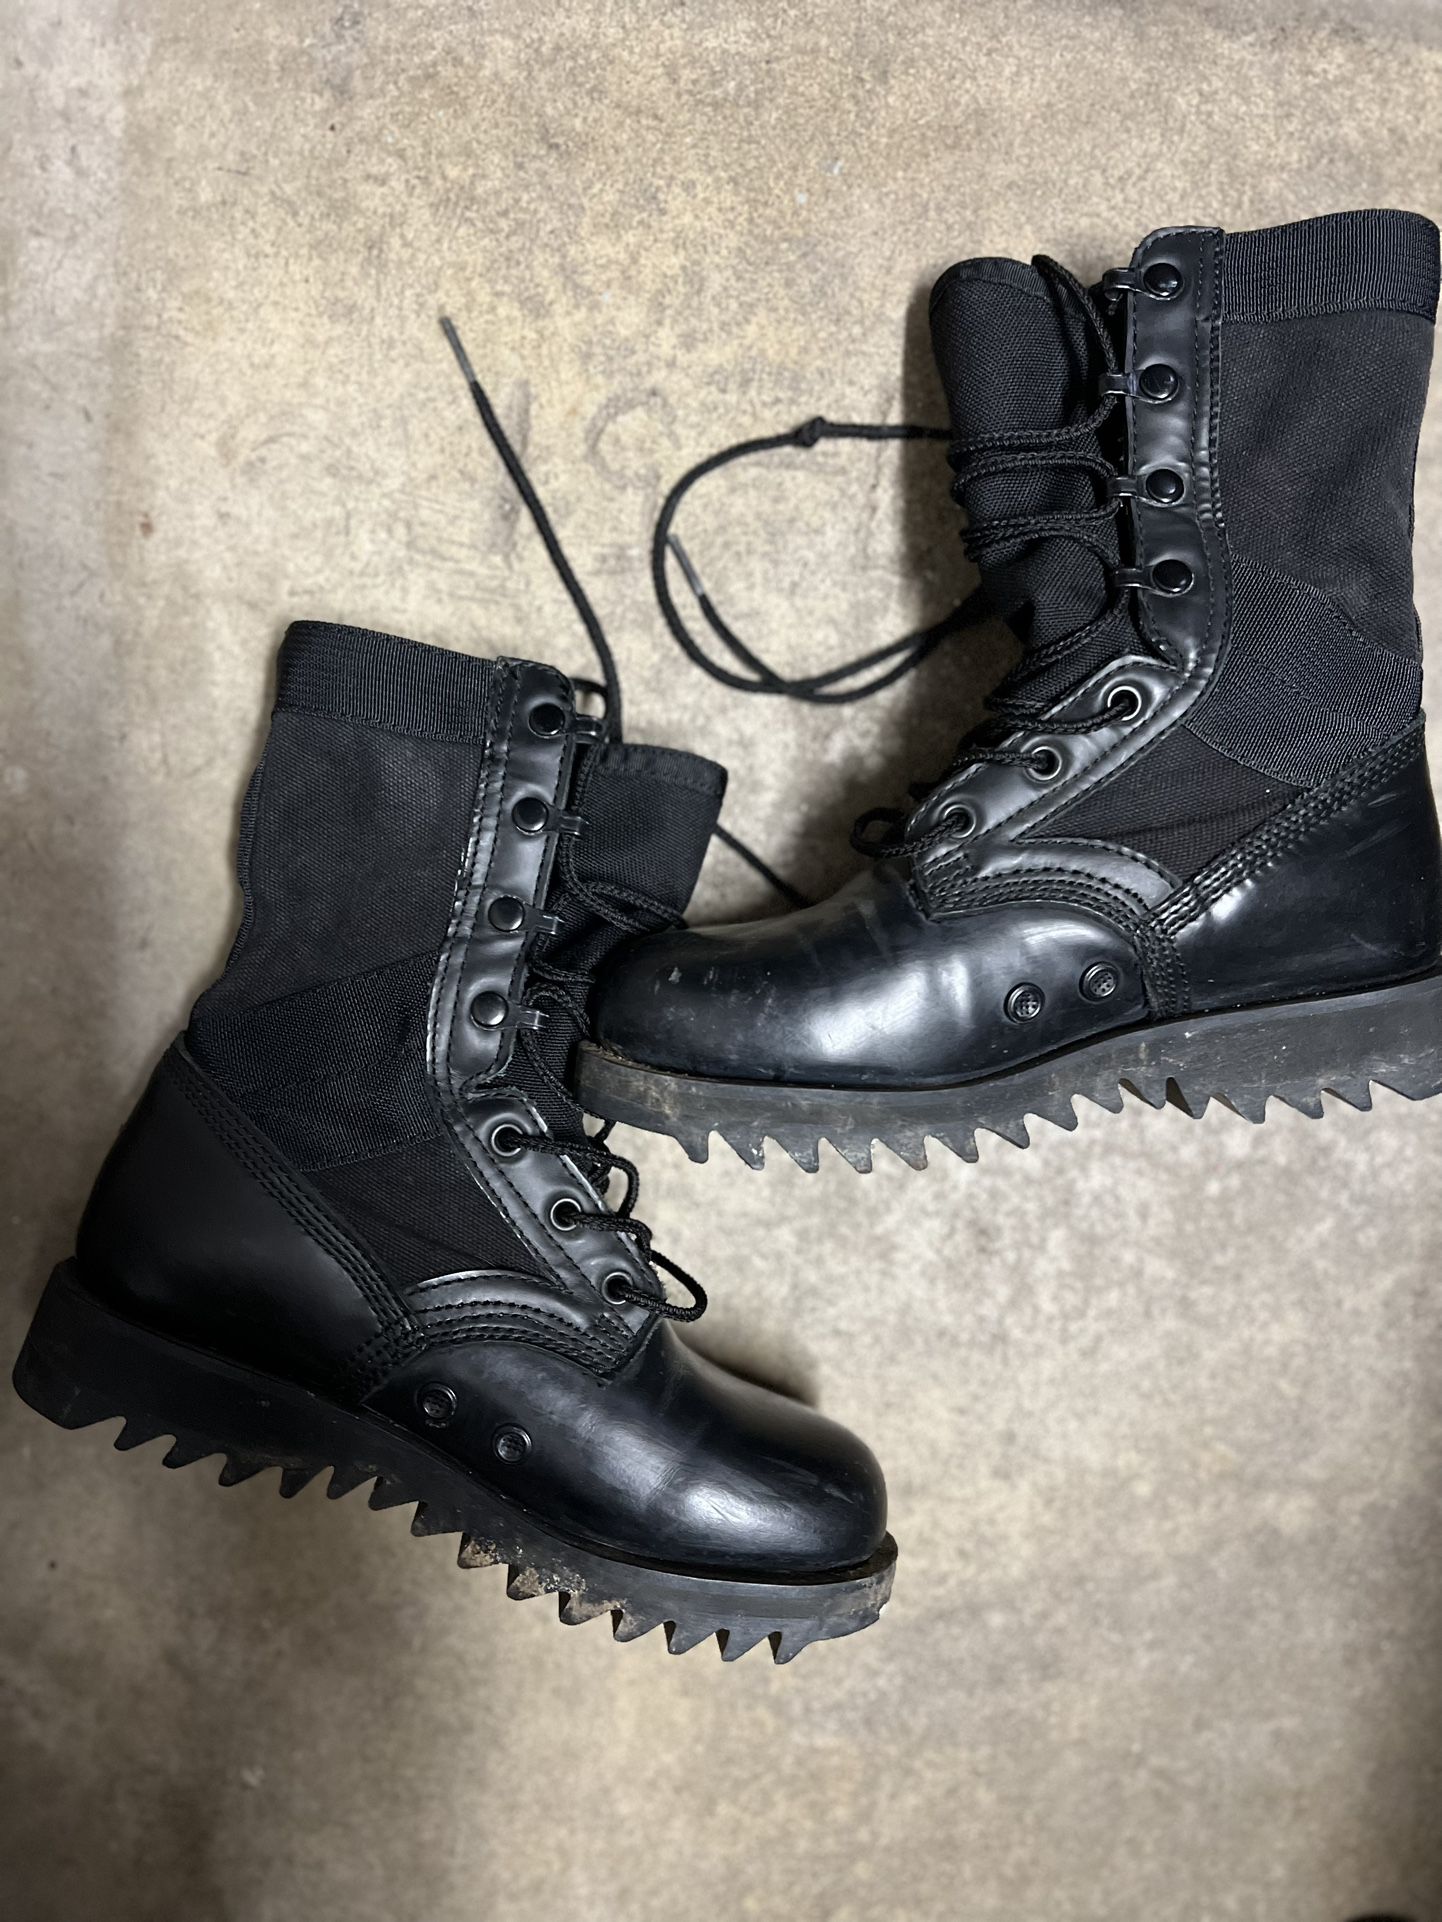 vintage military combat boots alatama 3.5W